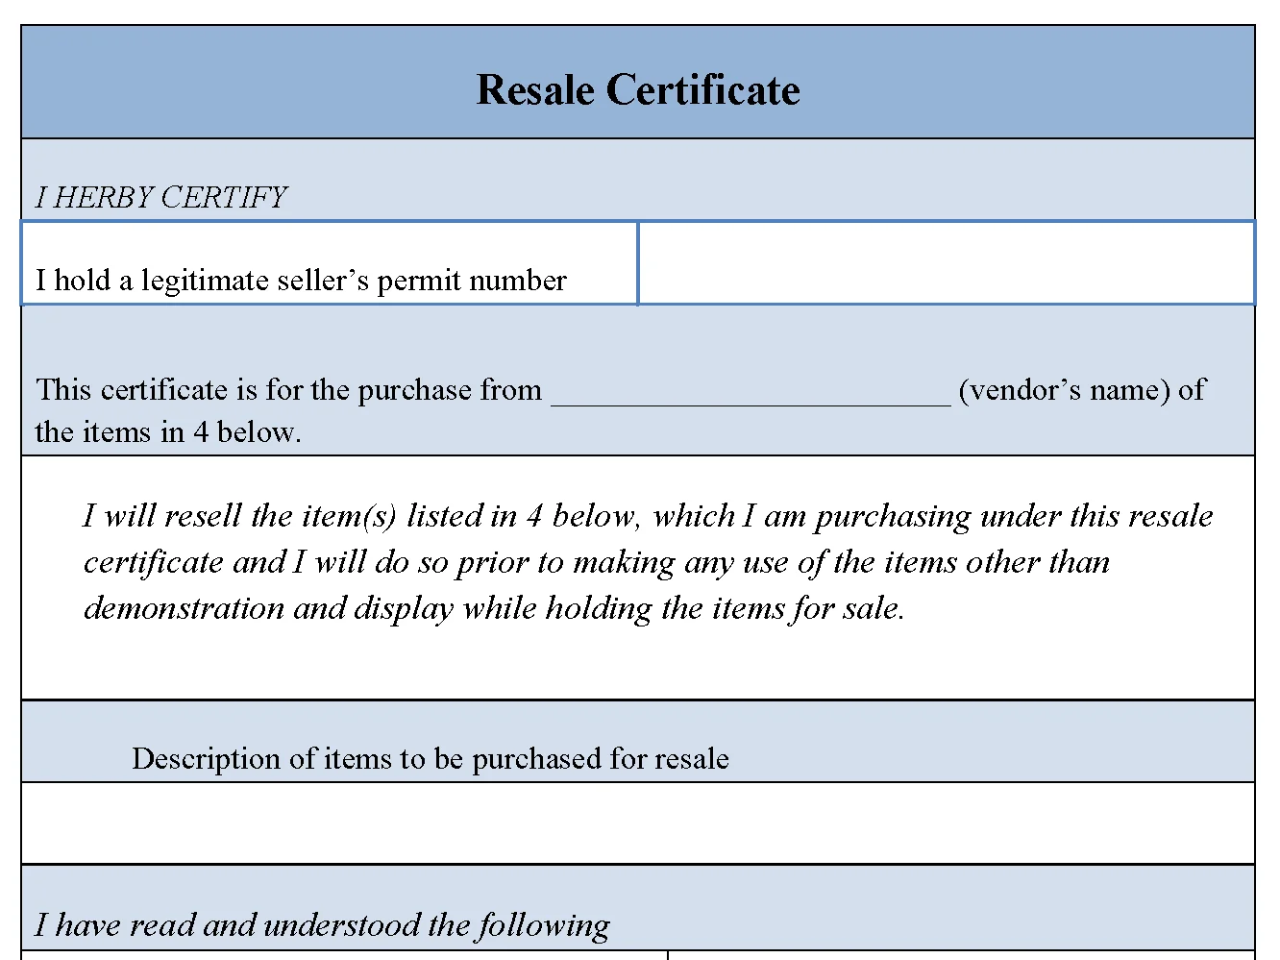 Resale Certificate Form